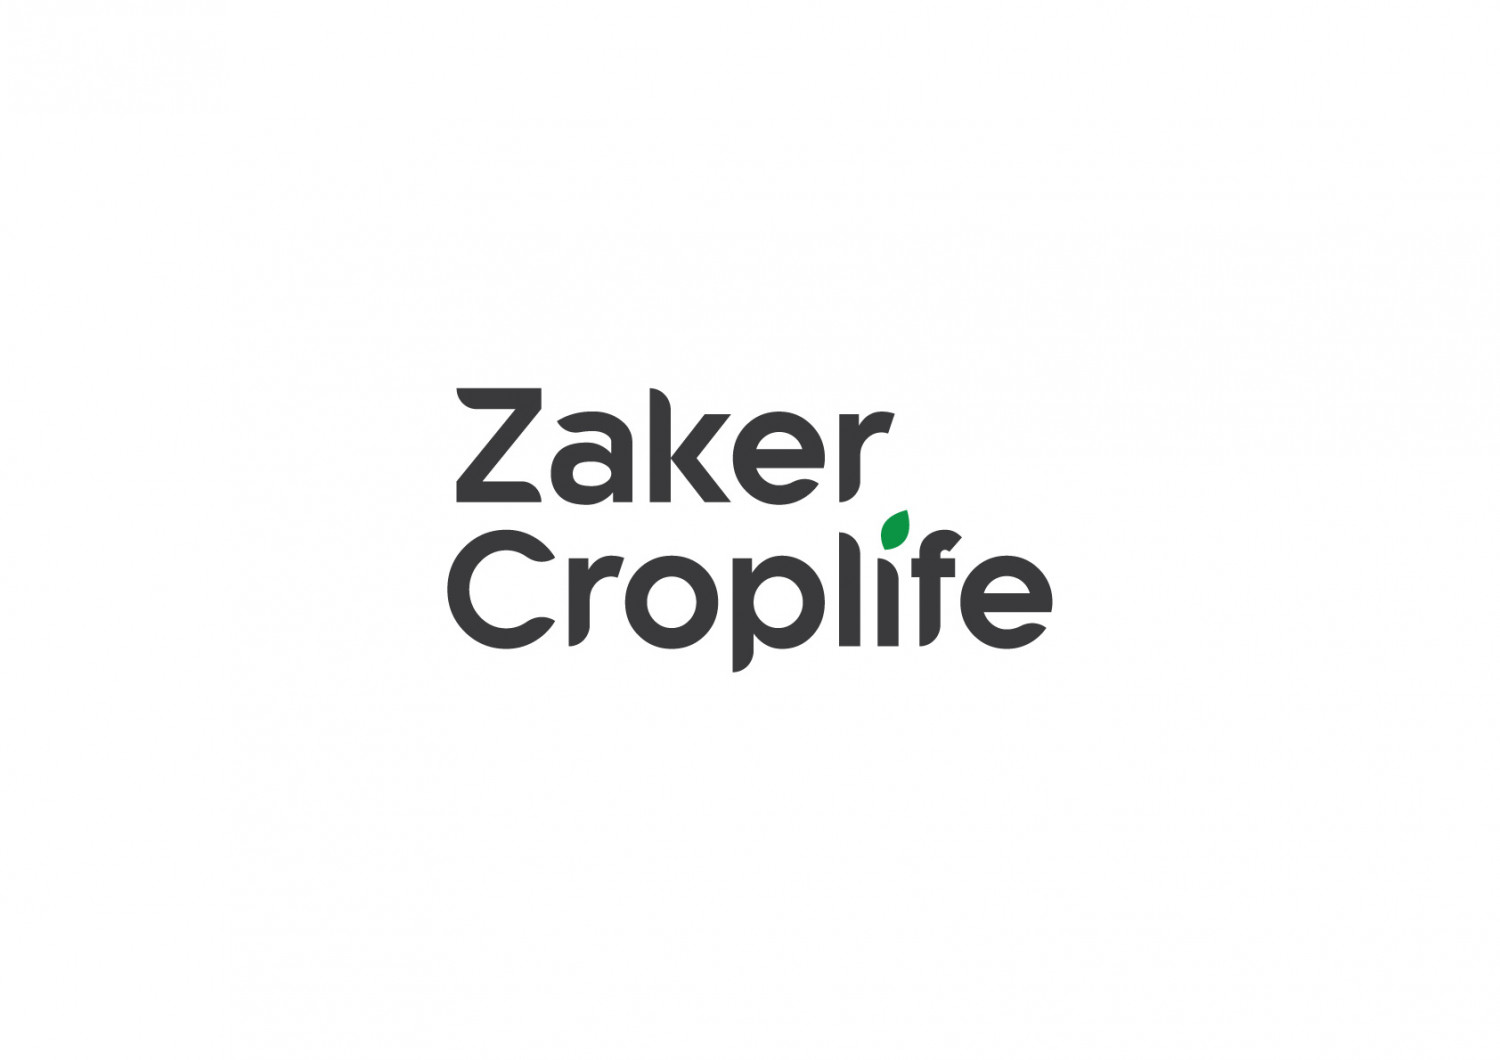 Zaker Croplife